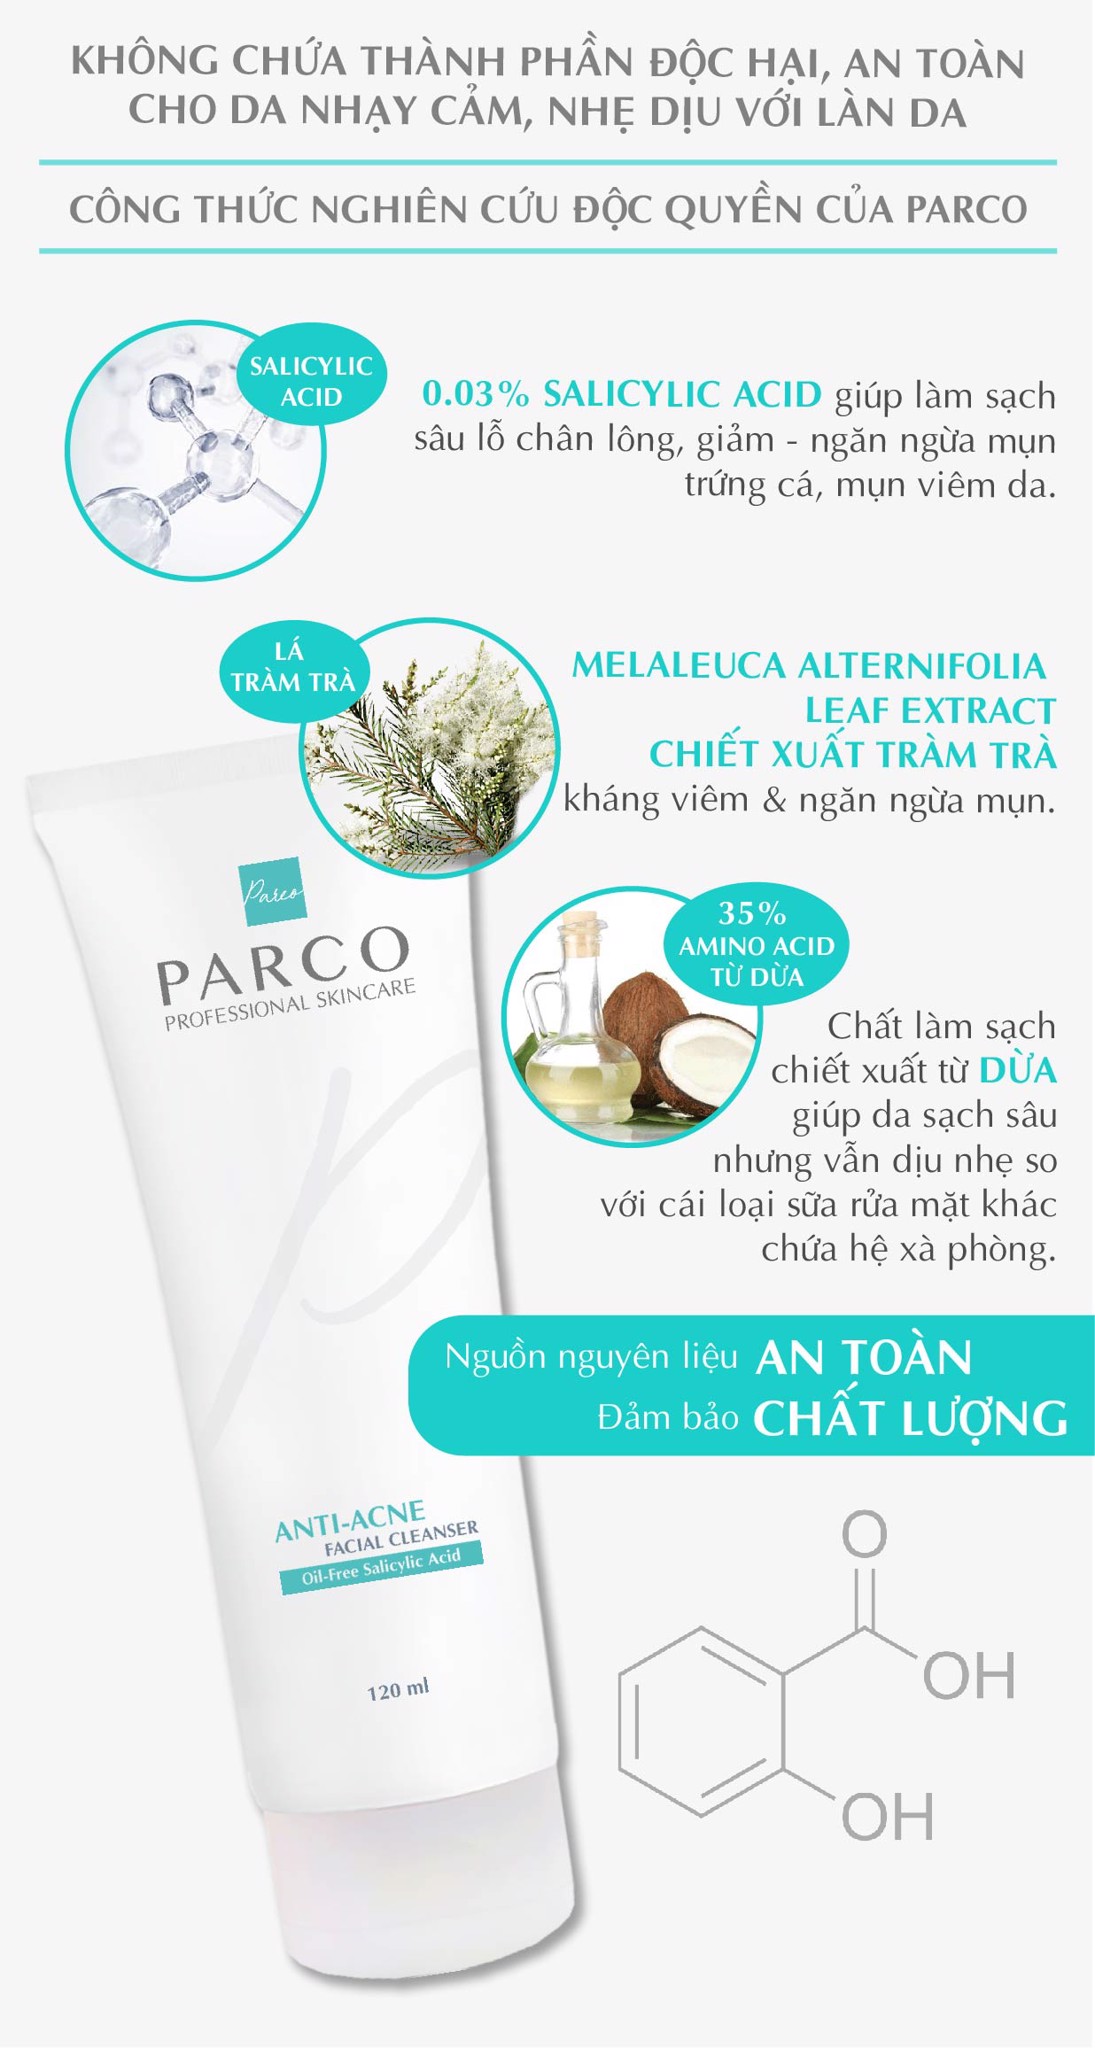 sữa rửa mặt ngăn ngừa mụn anti-acne facial cleanser (oil-free salicylic acid) parco 120ml 3